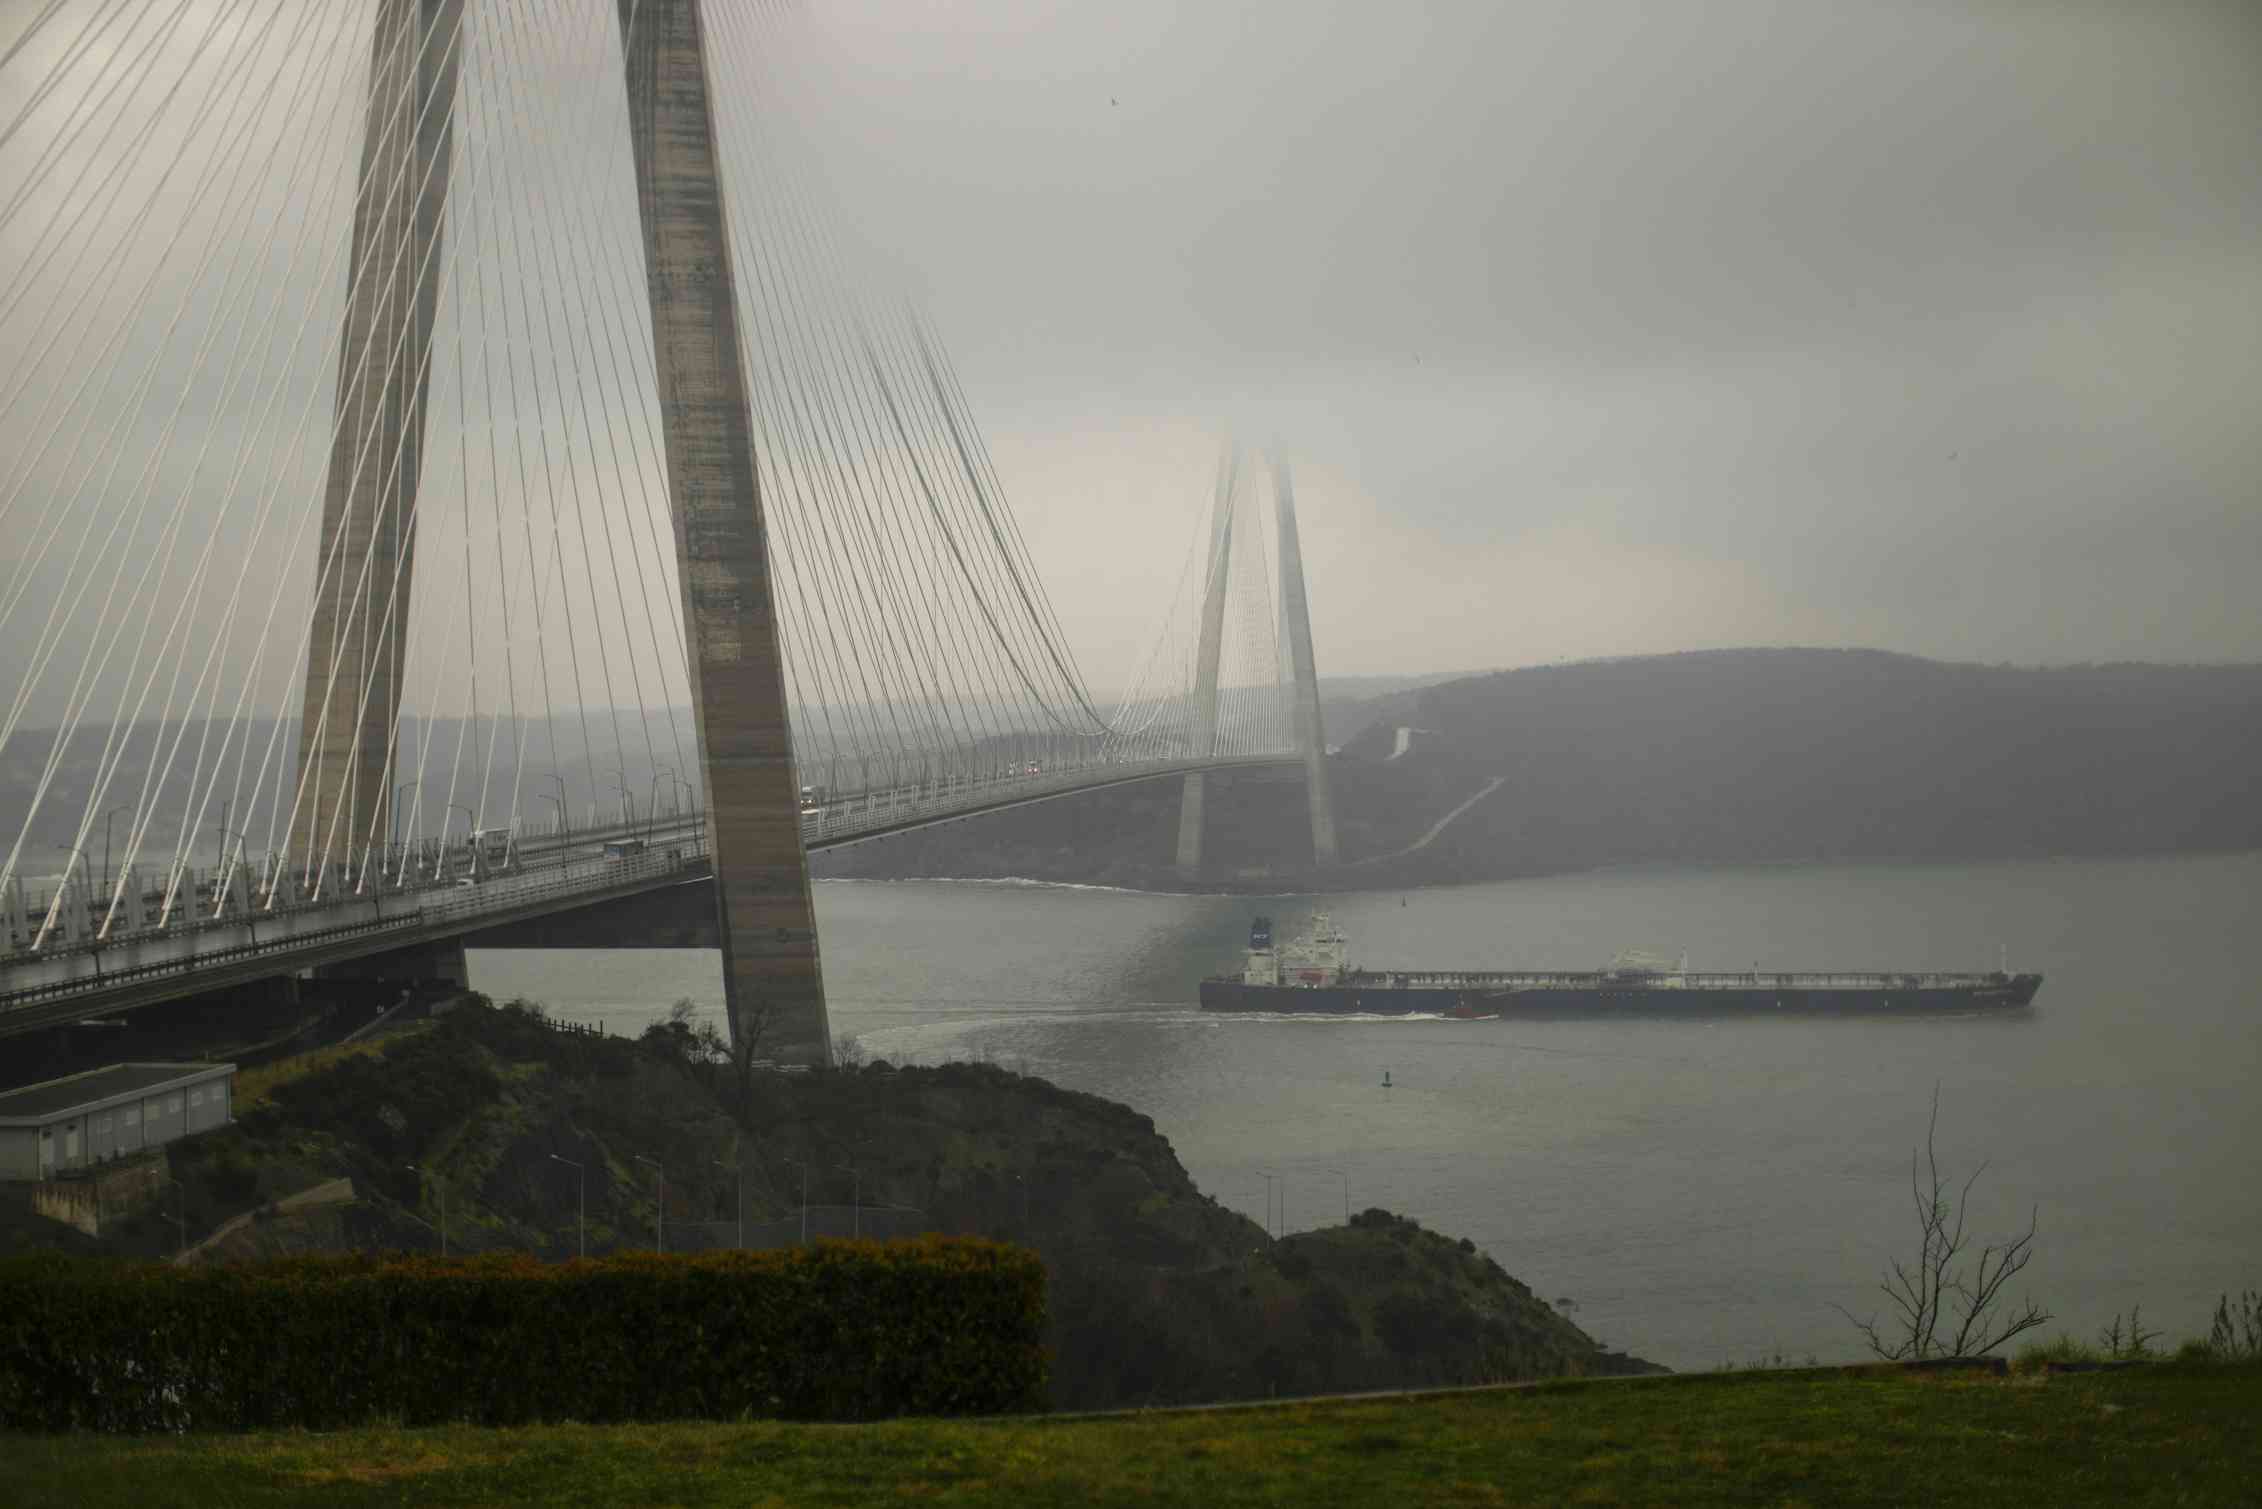 An oil tanker sails under a huge suspension bridge on a foggy day.